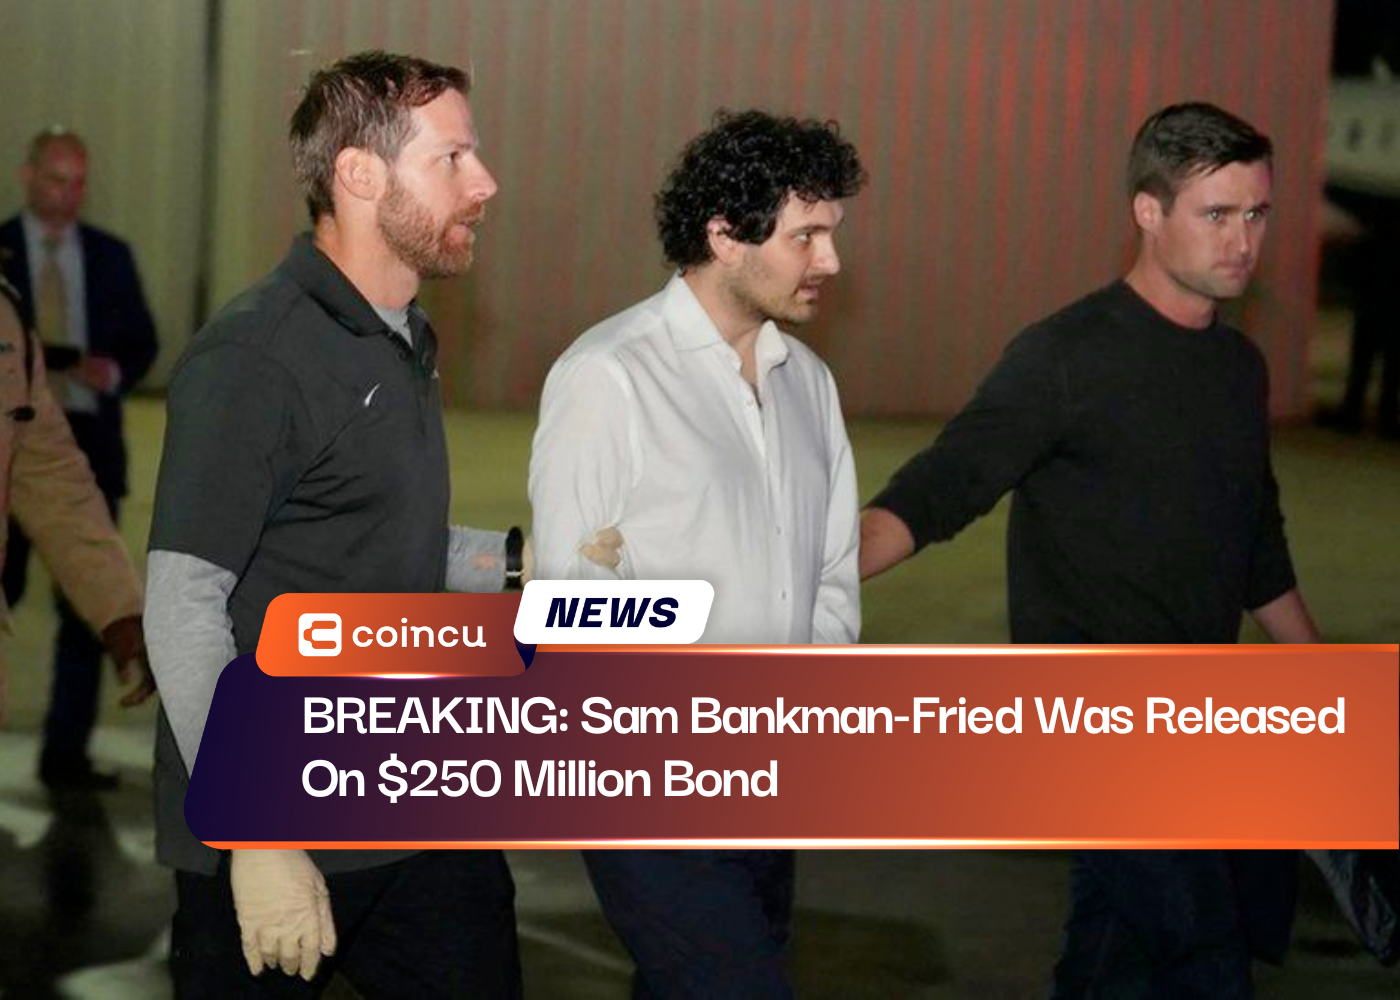 BREAKING: Sam Bankman-Fried Was Released On $250 Million Bond